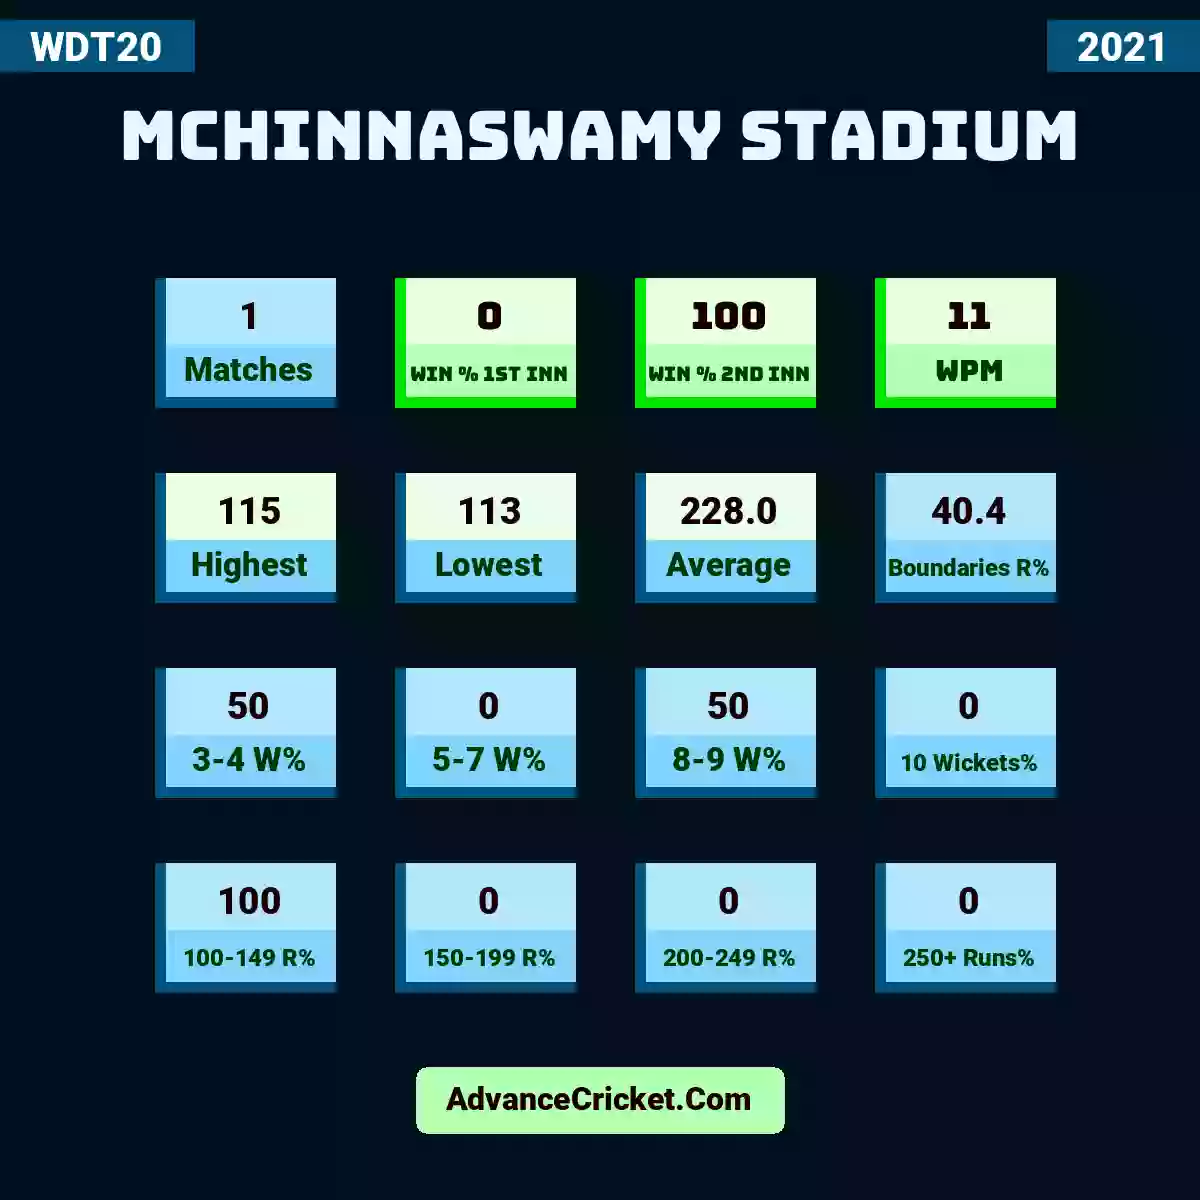 Image showing MChinnaswamy Stadium with Matches: 1, Win % 1st Inn: 0, Win % 2nd Inn: 100, WPM: 11, Highest: 115, Lowest: 113, Average: 228.0, Boundaries R%: 40.4, 3-4 W%: 50, 5-7 W%: 0, 8-9 W%: 50, 10 Wickets%: 0, 100-149 R%: 100, 150-199 R%: 0, 200-249 R%: 0, 250+ Runs%: 0.